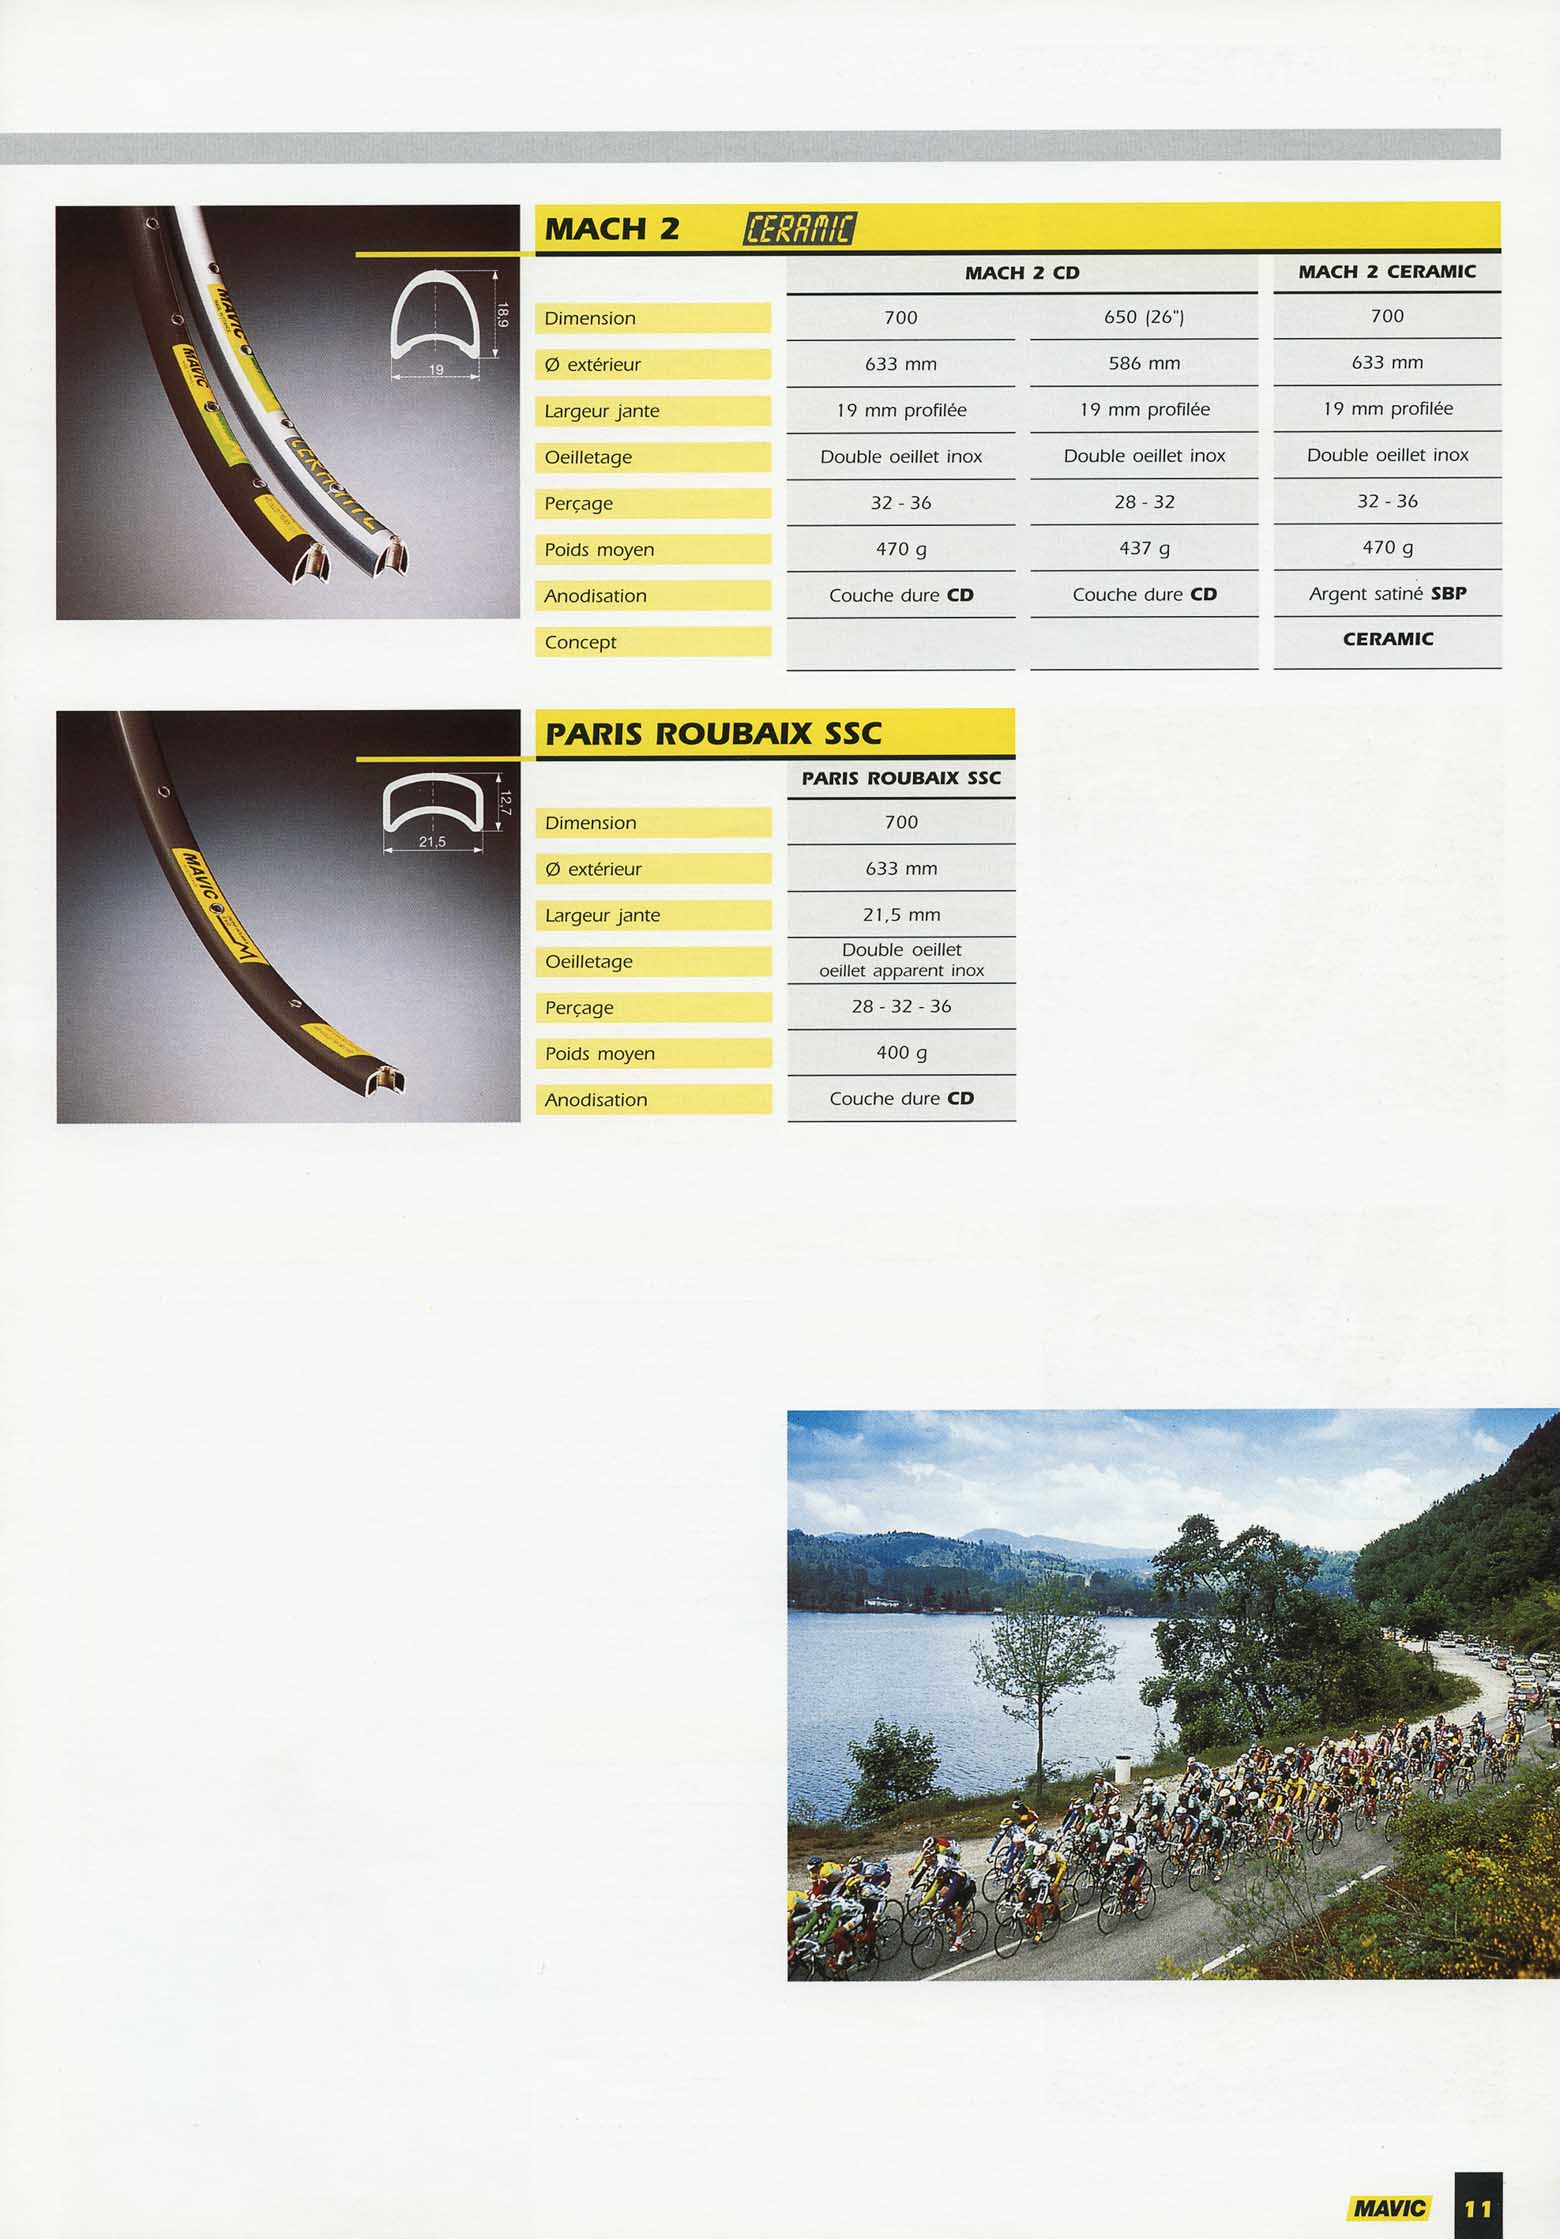 MAVIC Catalogue 1994 scan 11 main image